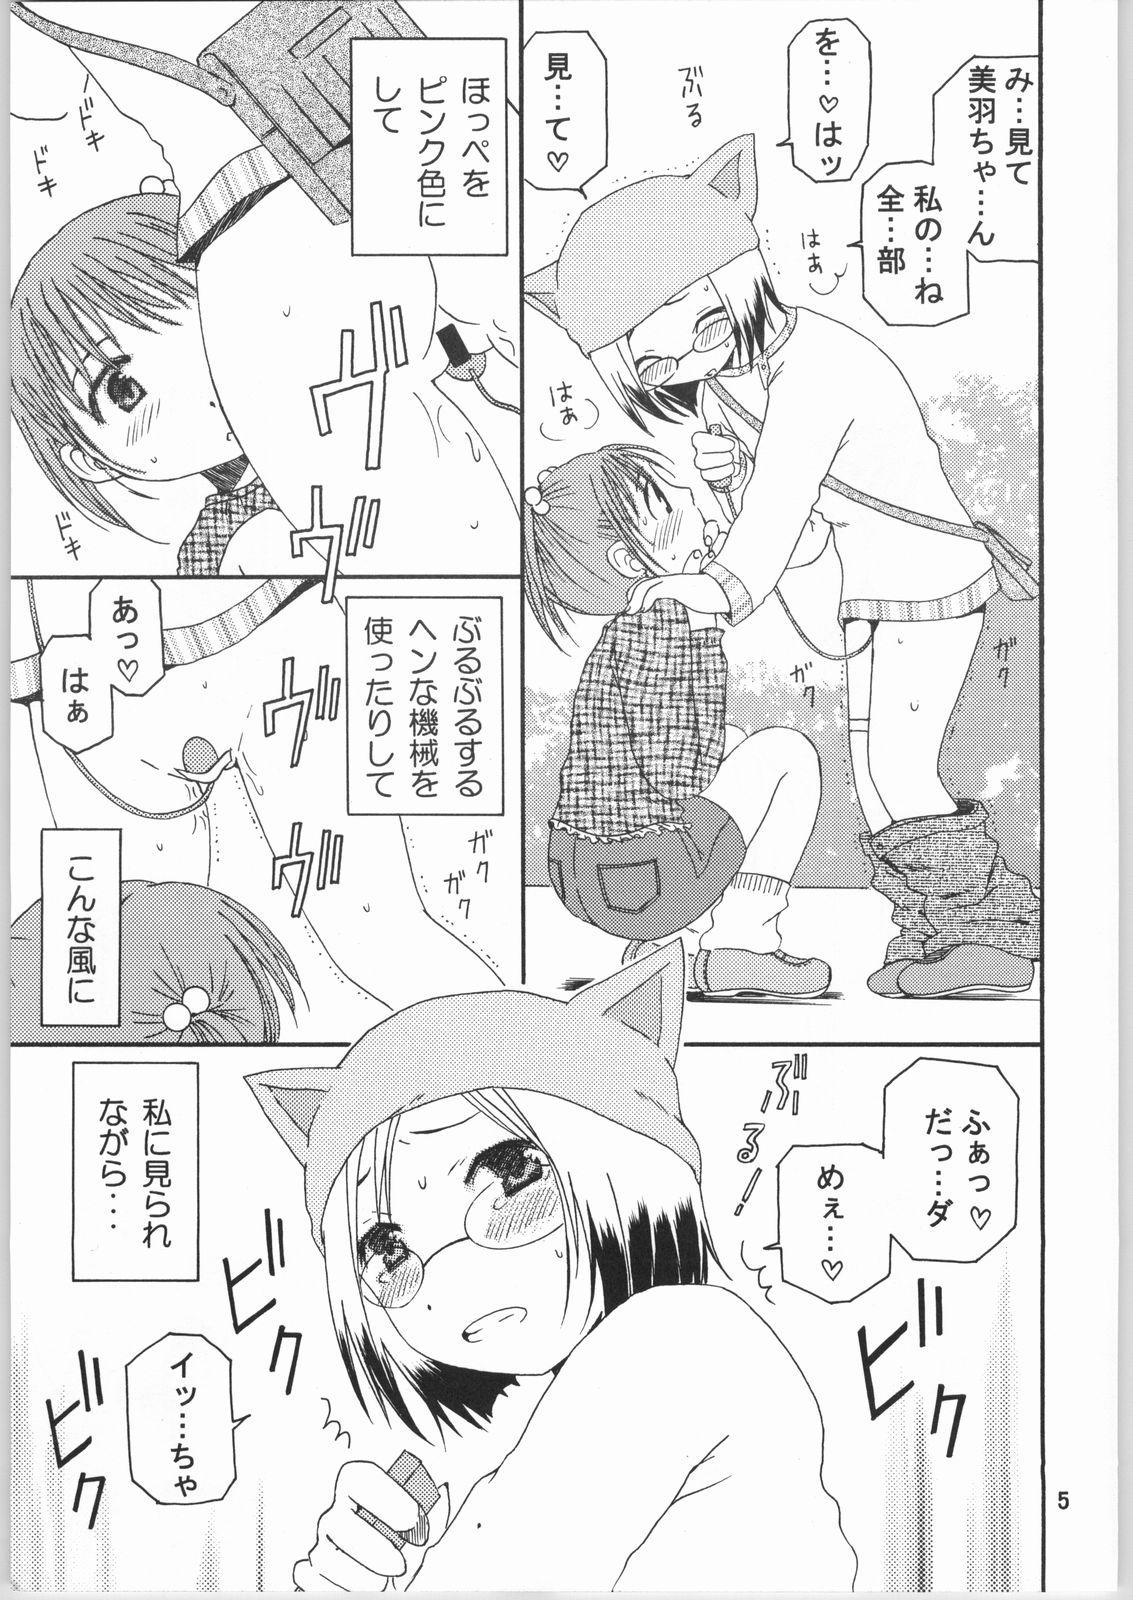 Pmv Strawberry Short Cake - Ichigo mashimaro Pounded - Page 4